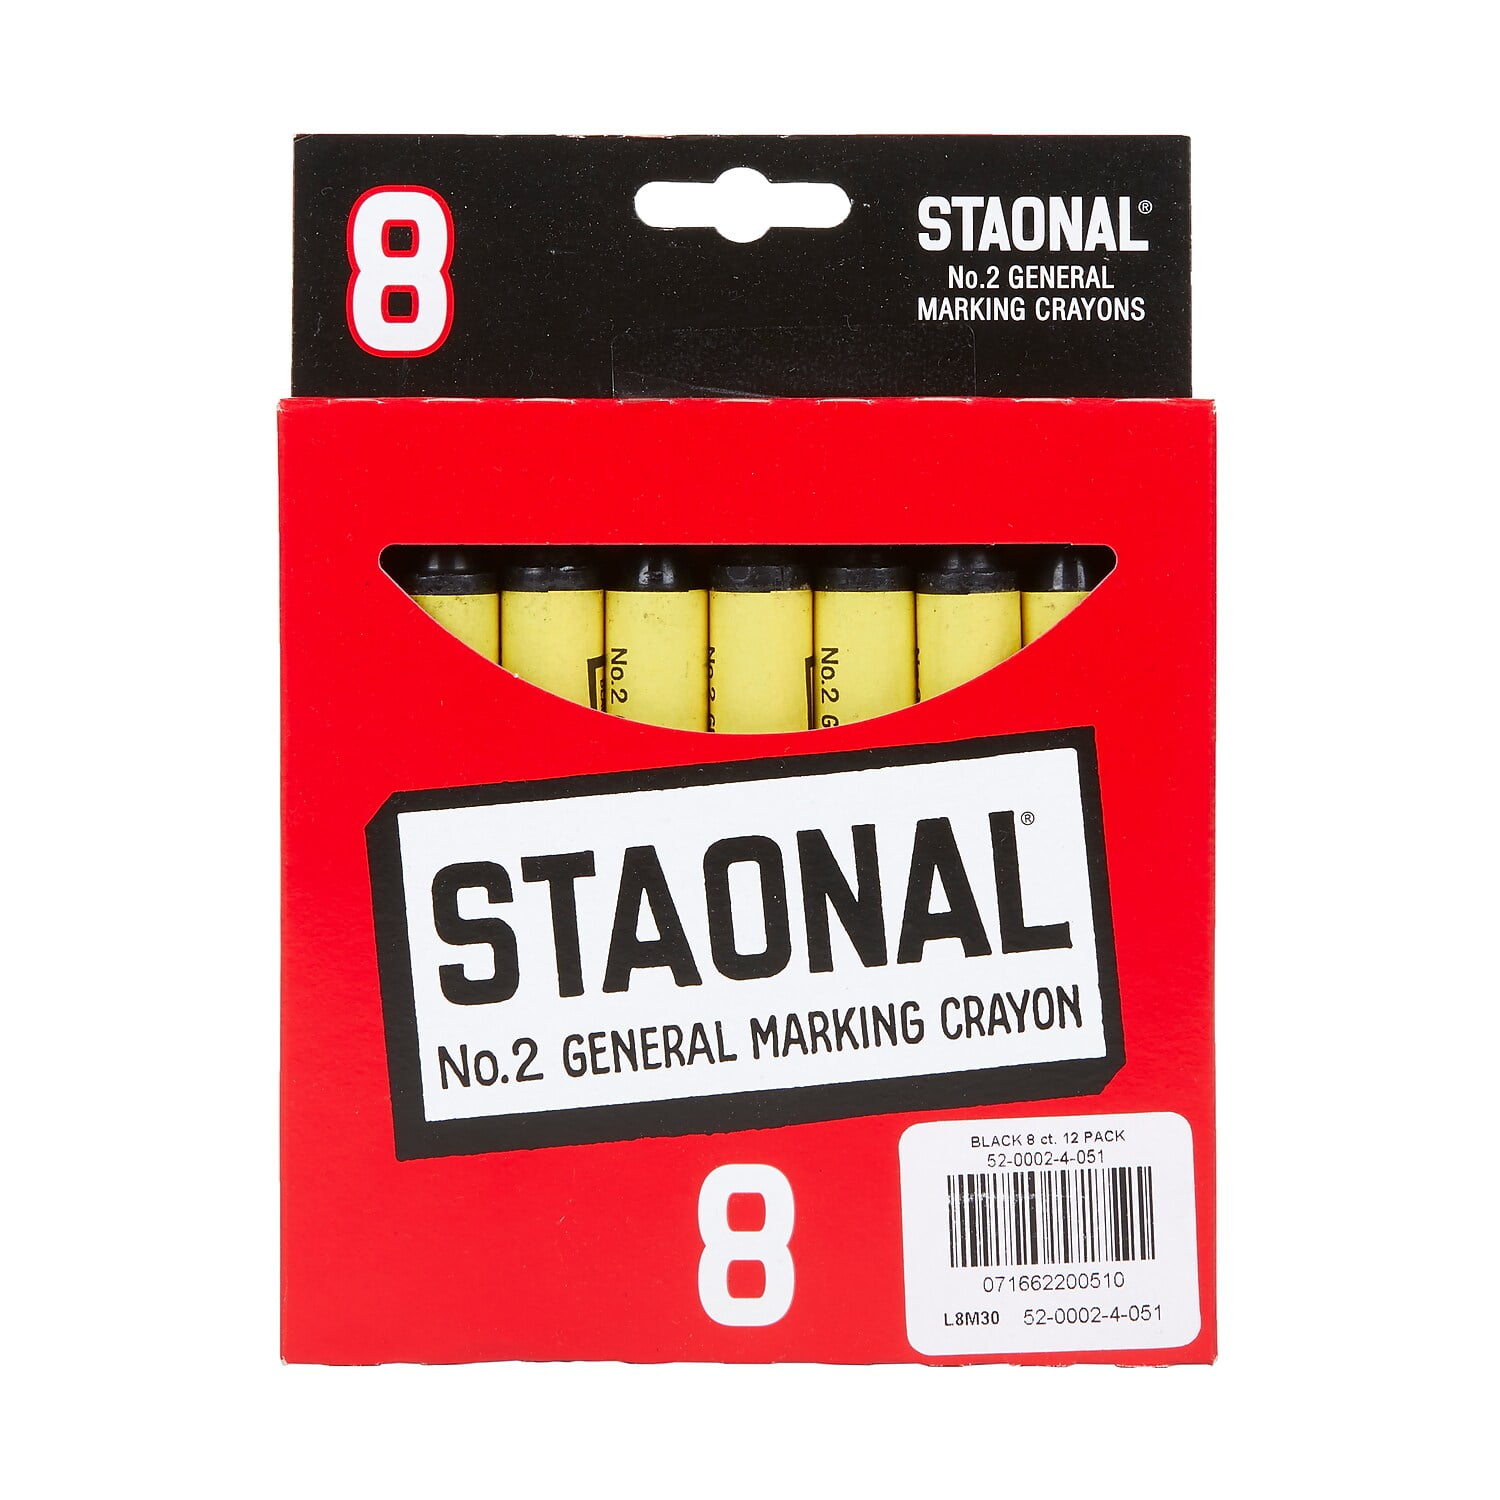 Crayola Staonal Marking Crayons Black 8/Box (52-0002-2-051) 563901